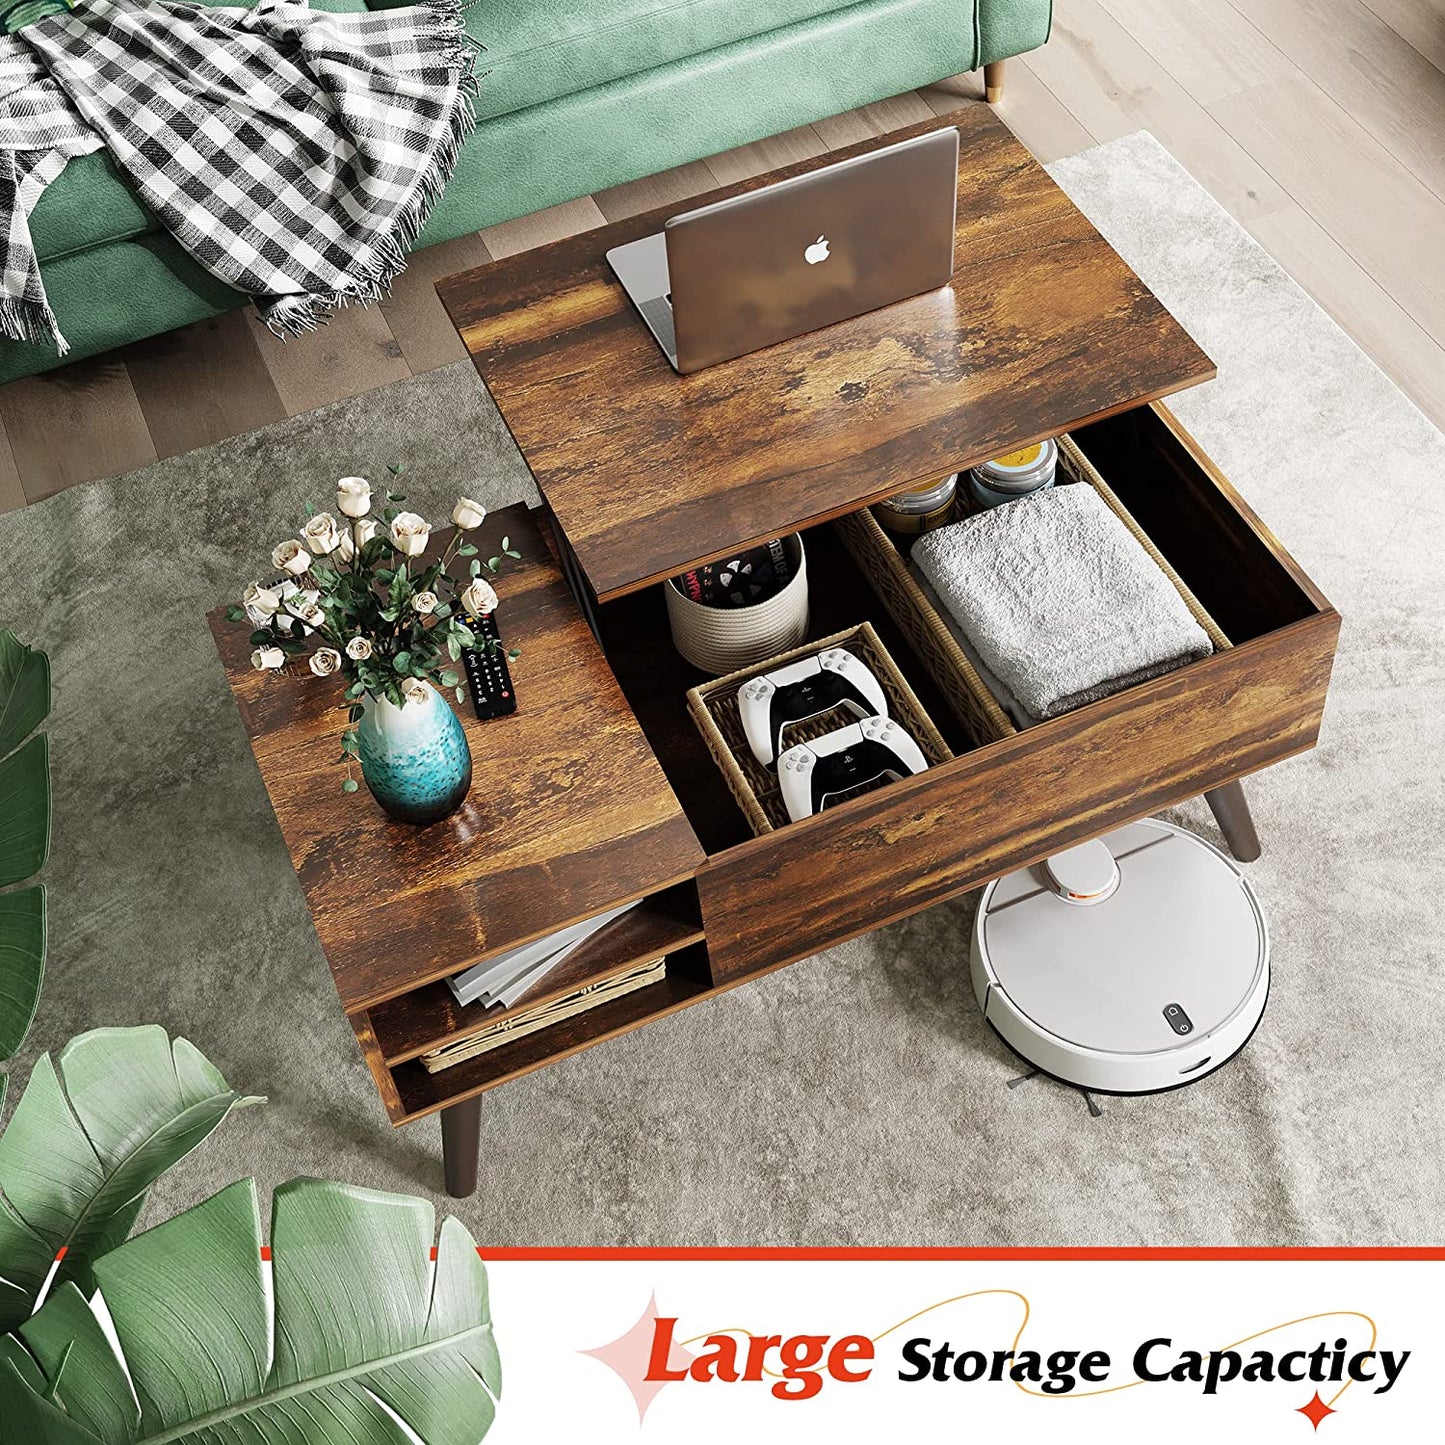 Wood Lift Top Coffee Table with Adjustable Storage Shelf